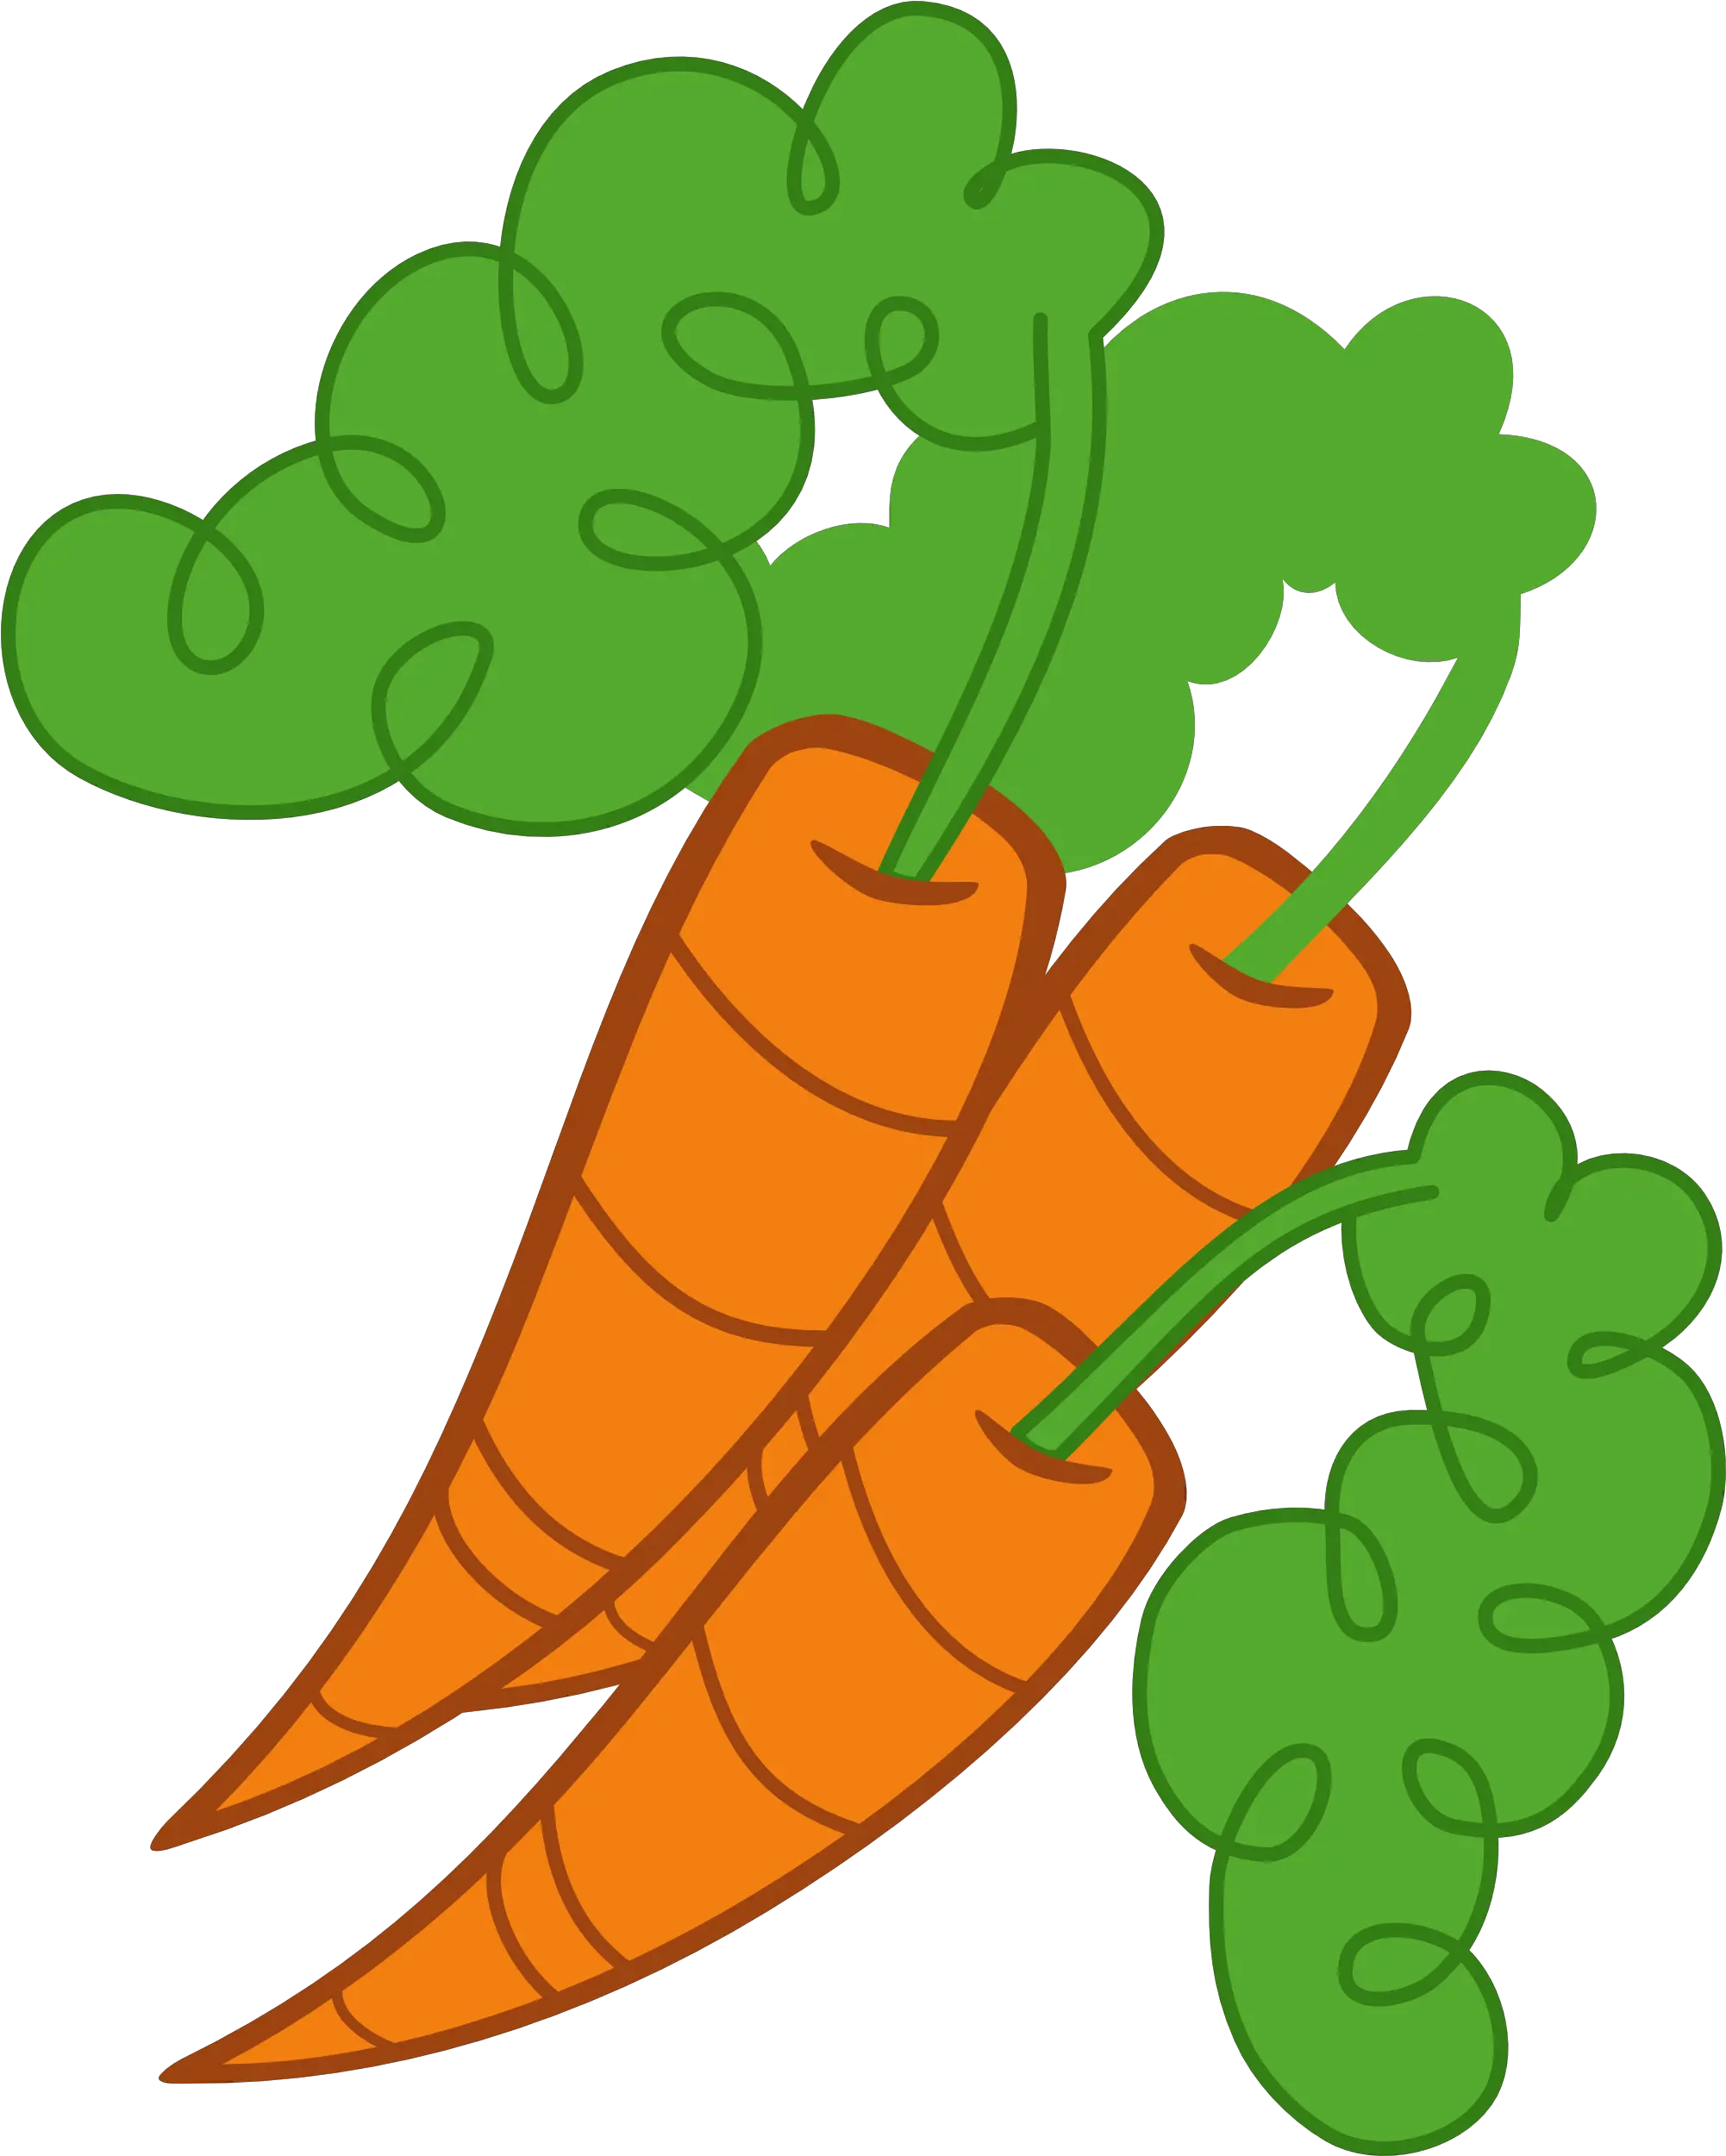 Carrot Img Draggable False Class Emoji Alt Src S Org Png Mlp Carrot Top Cutie Mark Porg Png